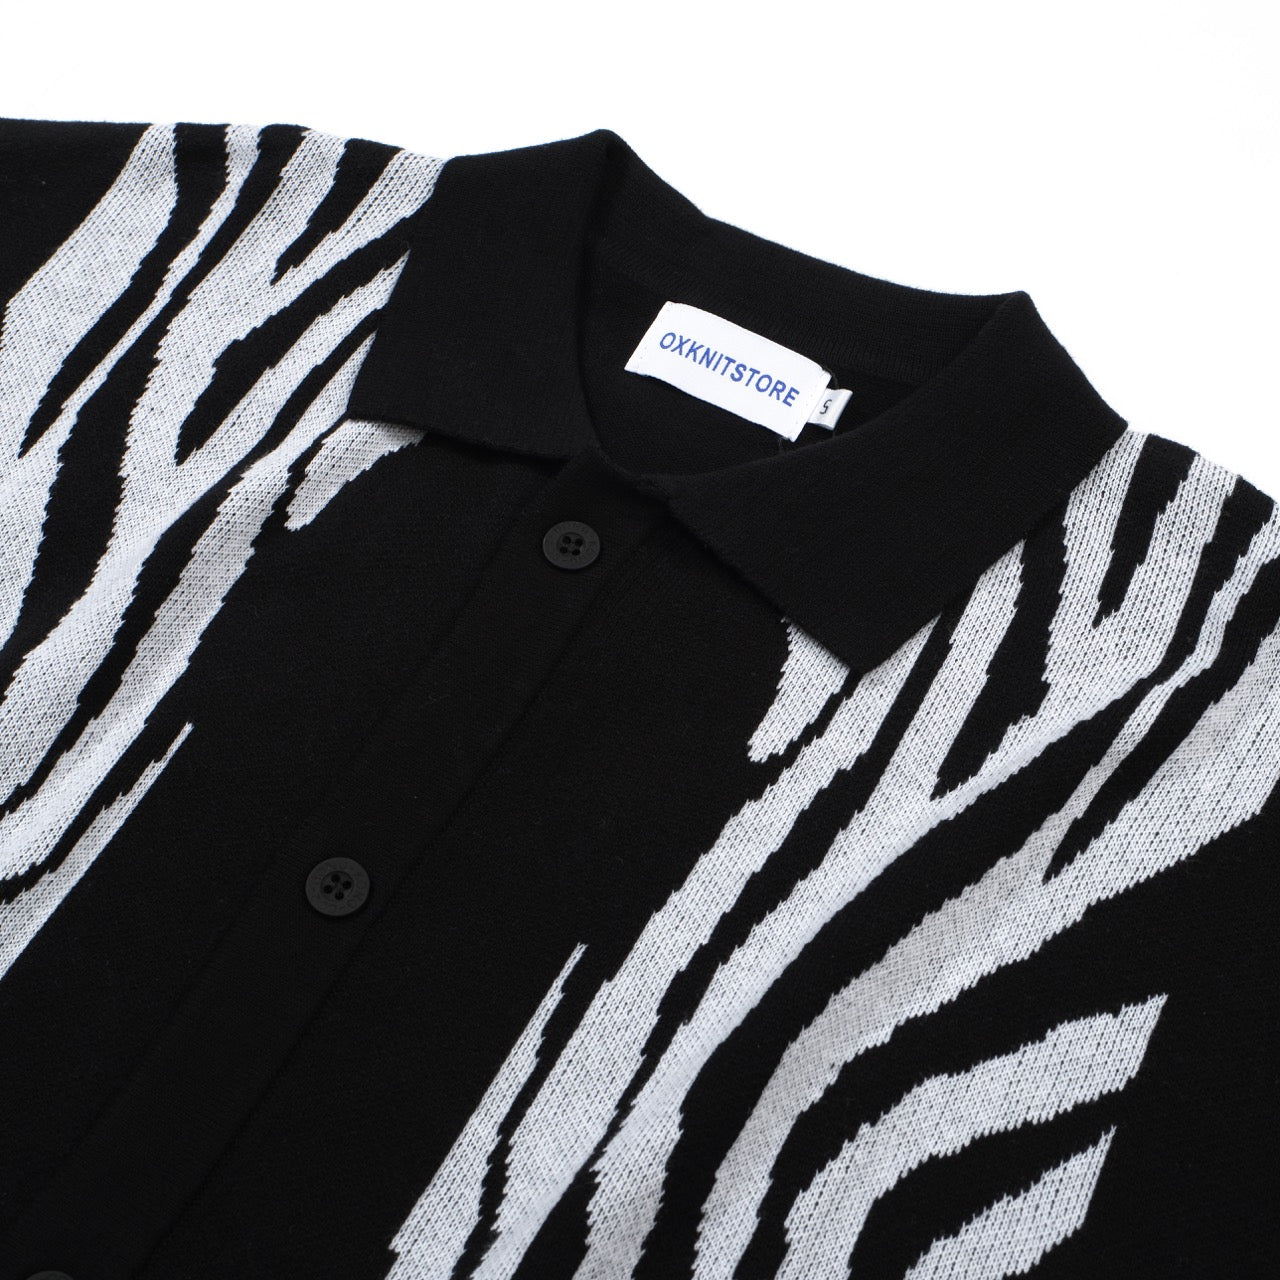 OXKNIT Men Vintage Clothing 1960s Mod Style Casual Zebra Pattern Black Knit Retro Polo Contains Pocket